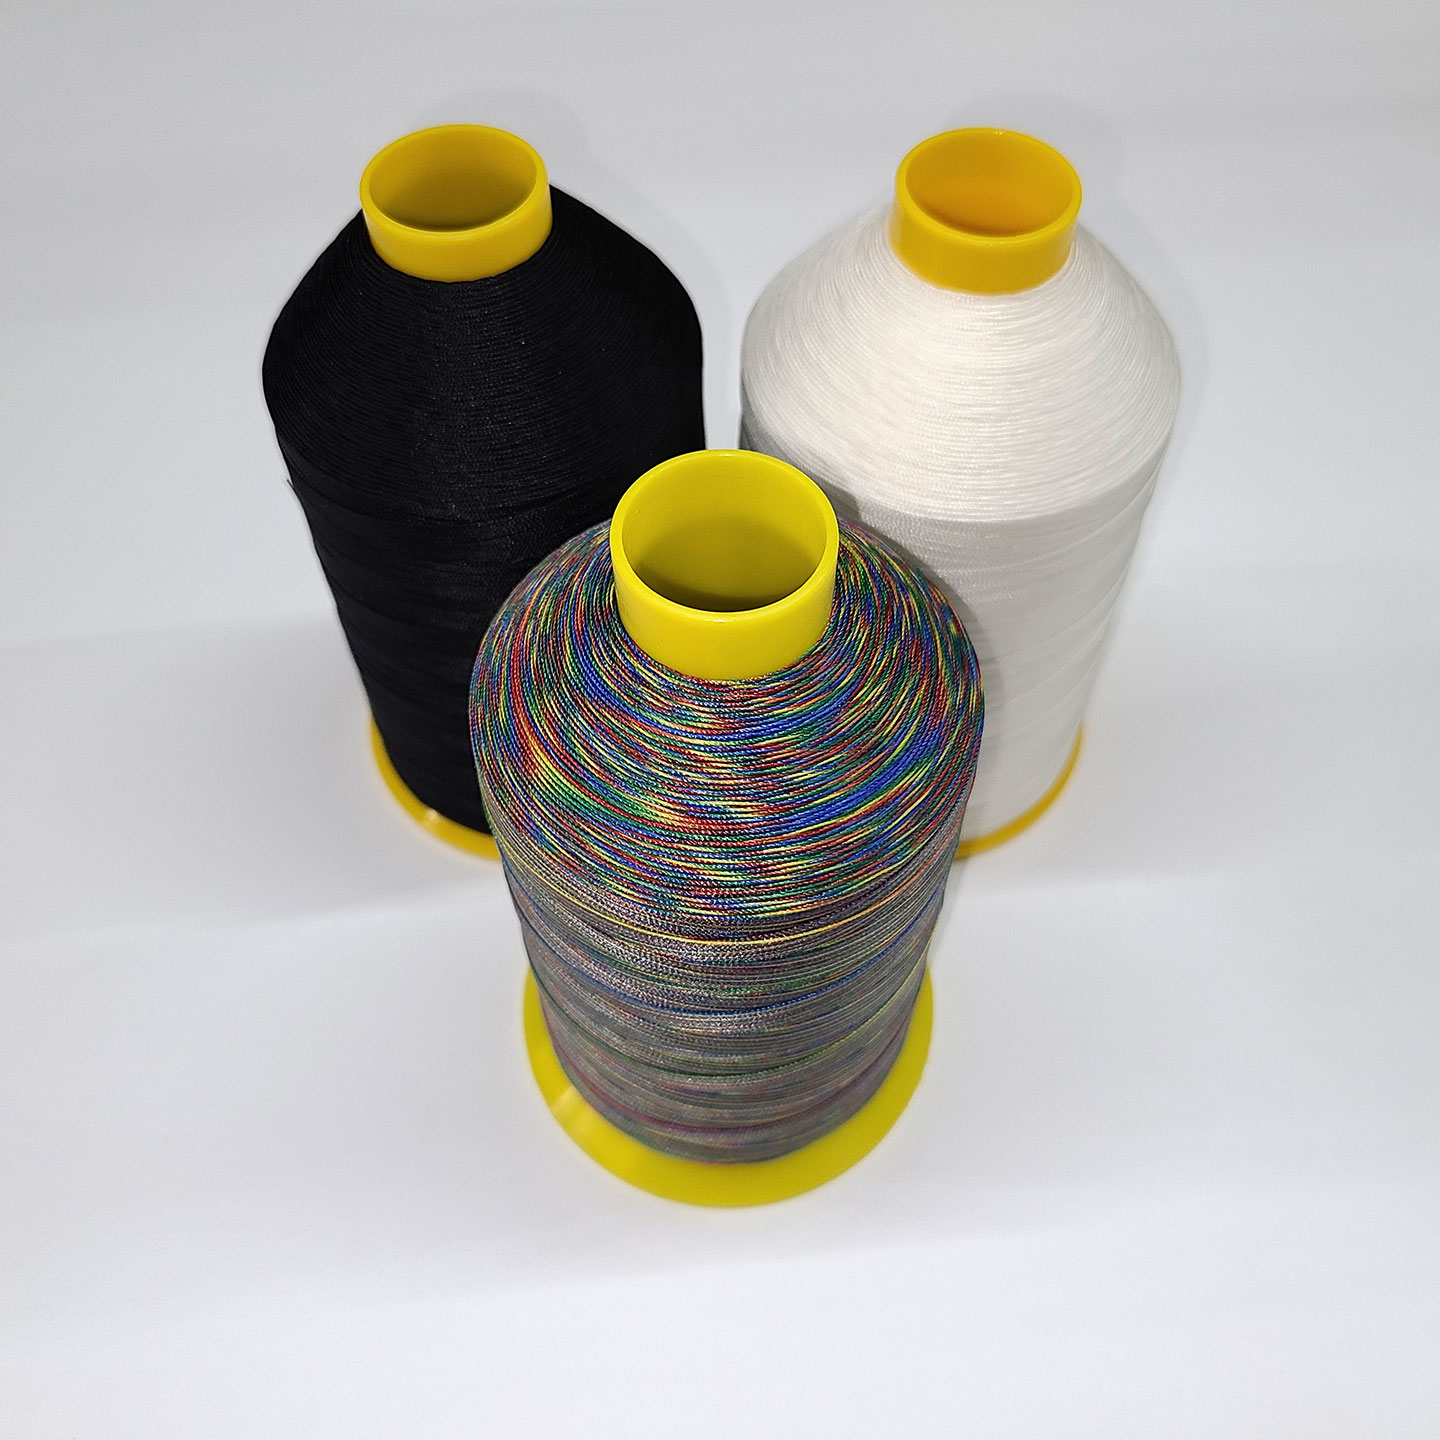 Bonded Nylon Thread Multiple Colors